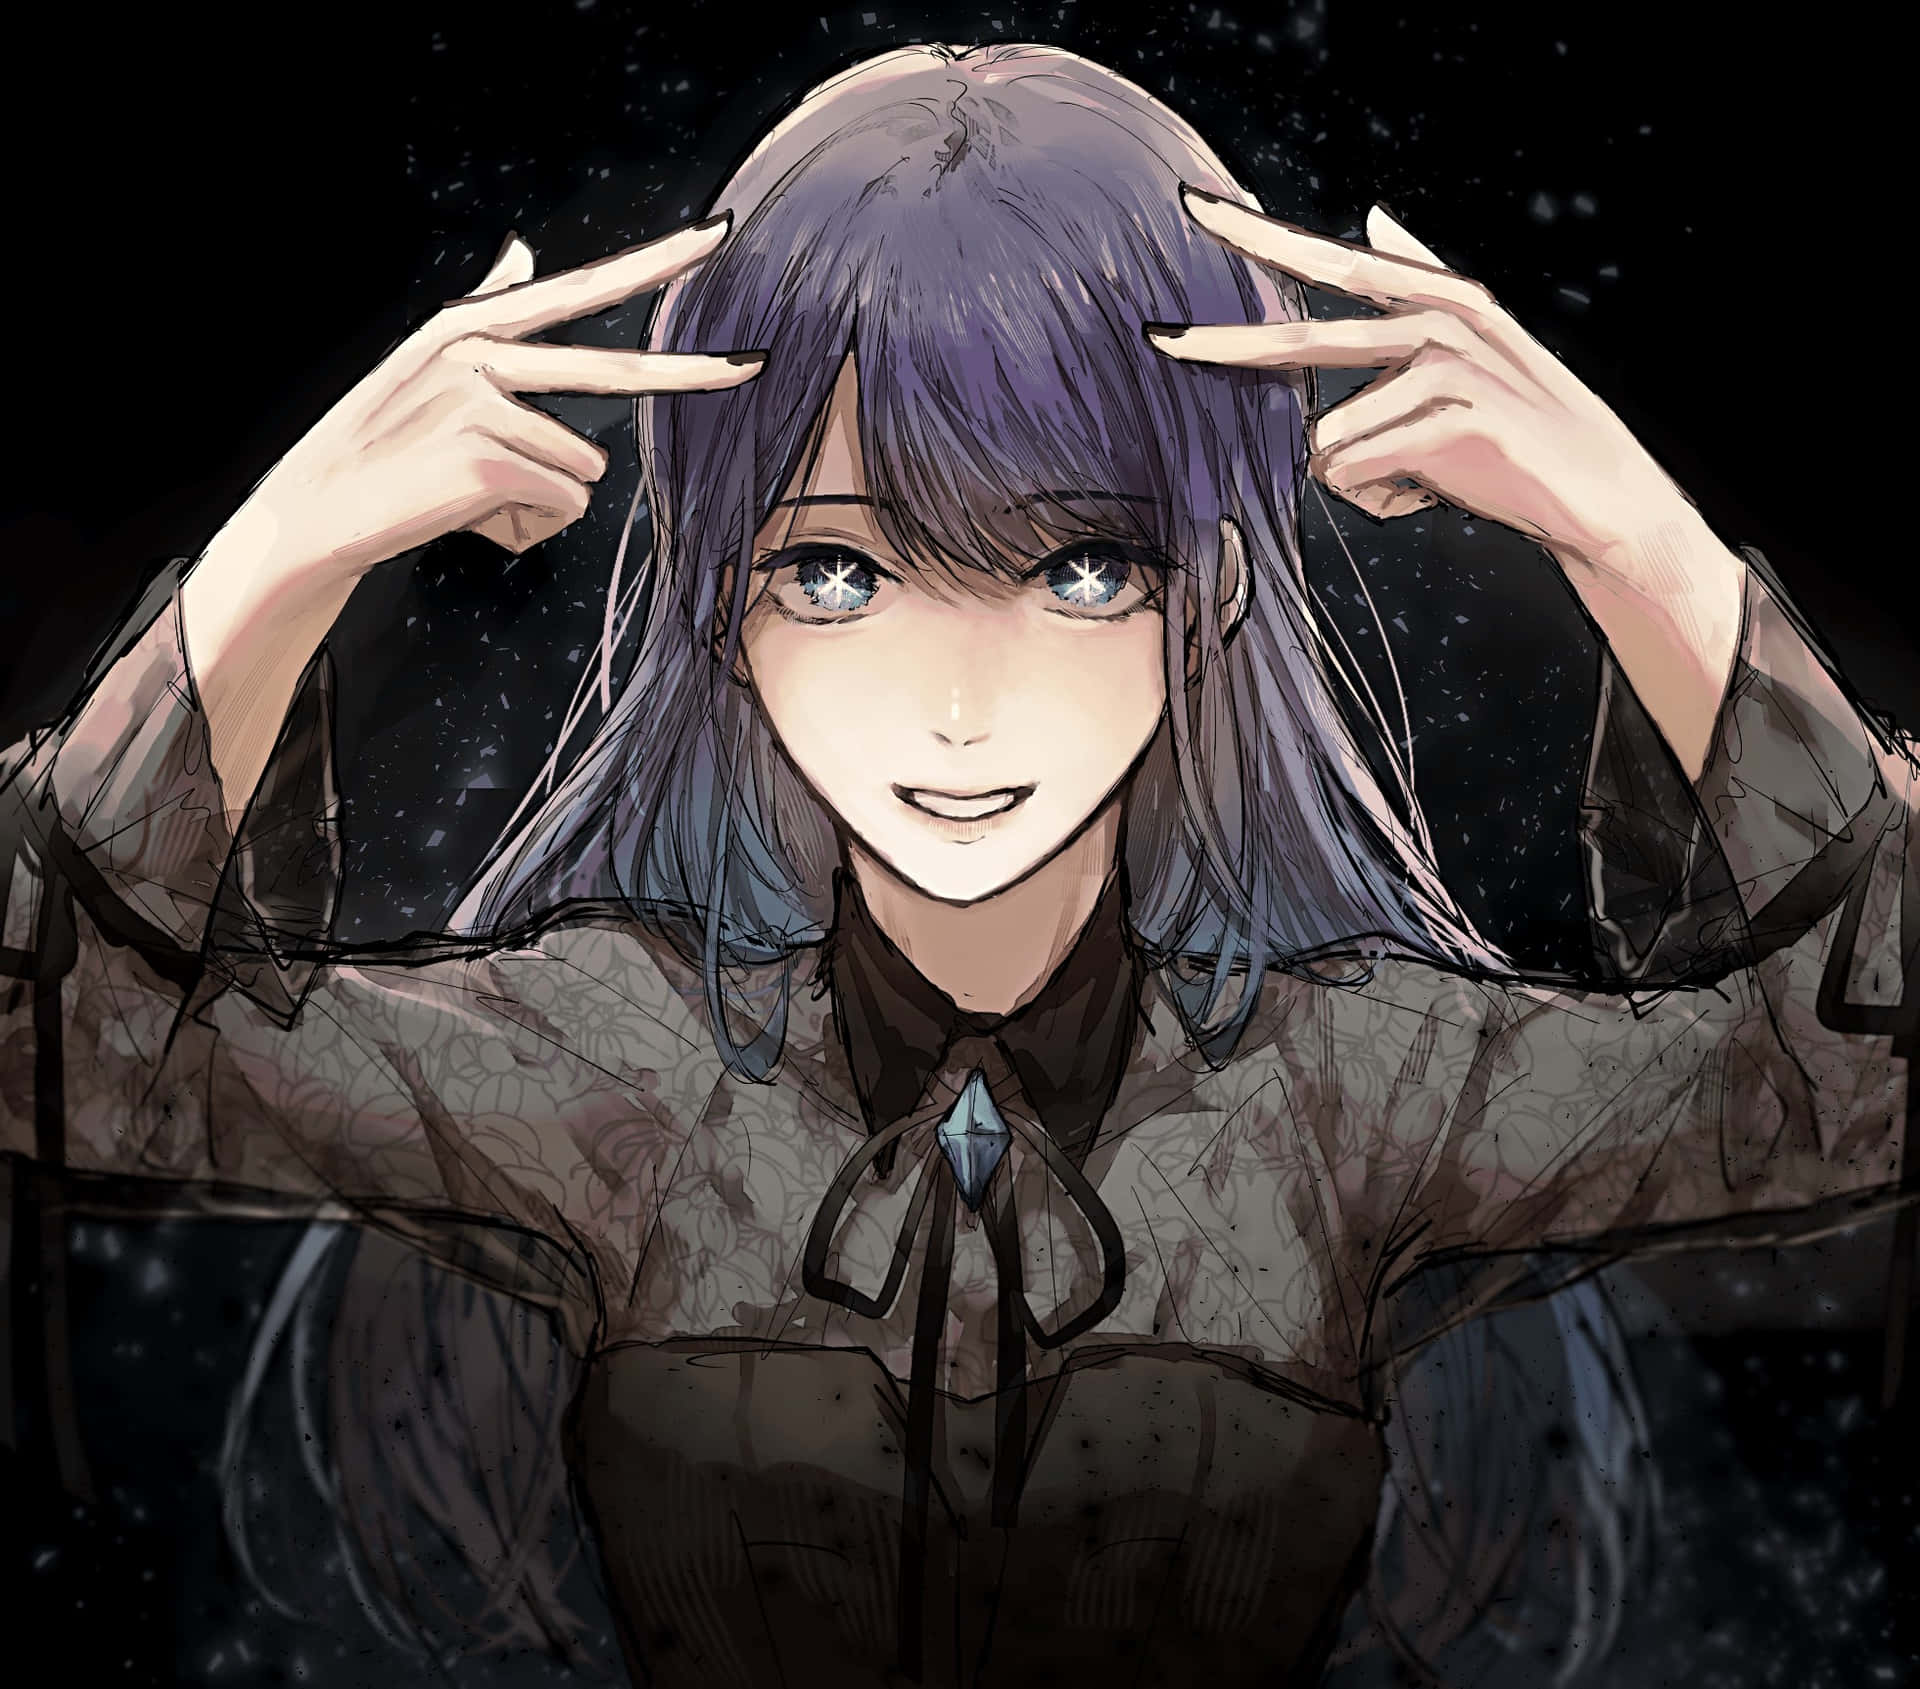 Smiling Anime Girl Starry Background Wallpaper